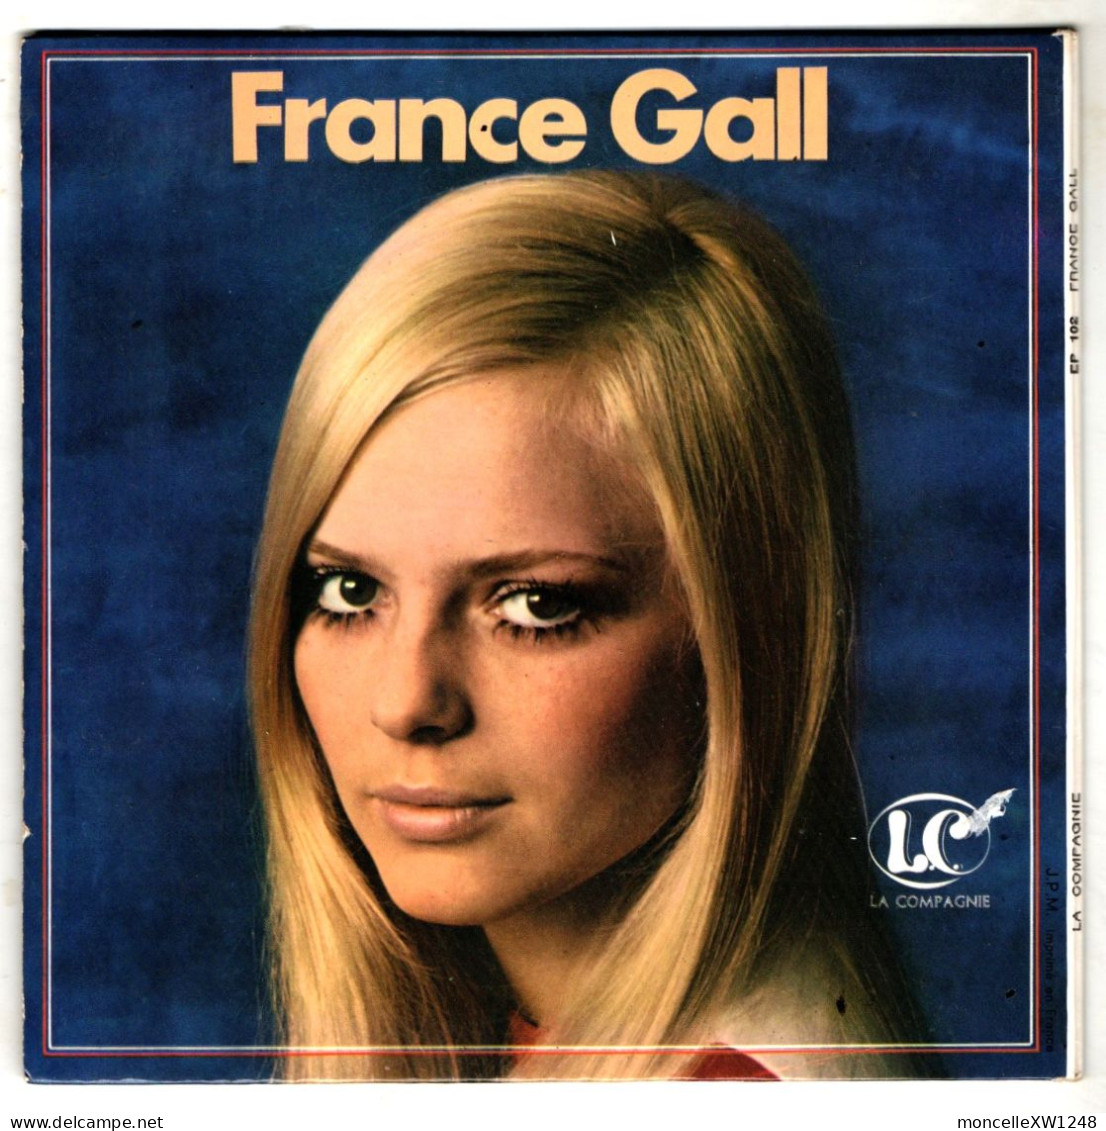 France Gall - 45 T EP Homme Tout Petit (1969) - 45 G - Maxi-Single